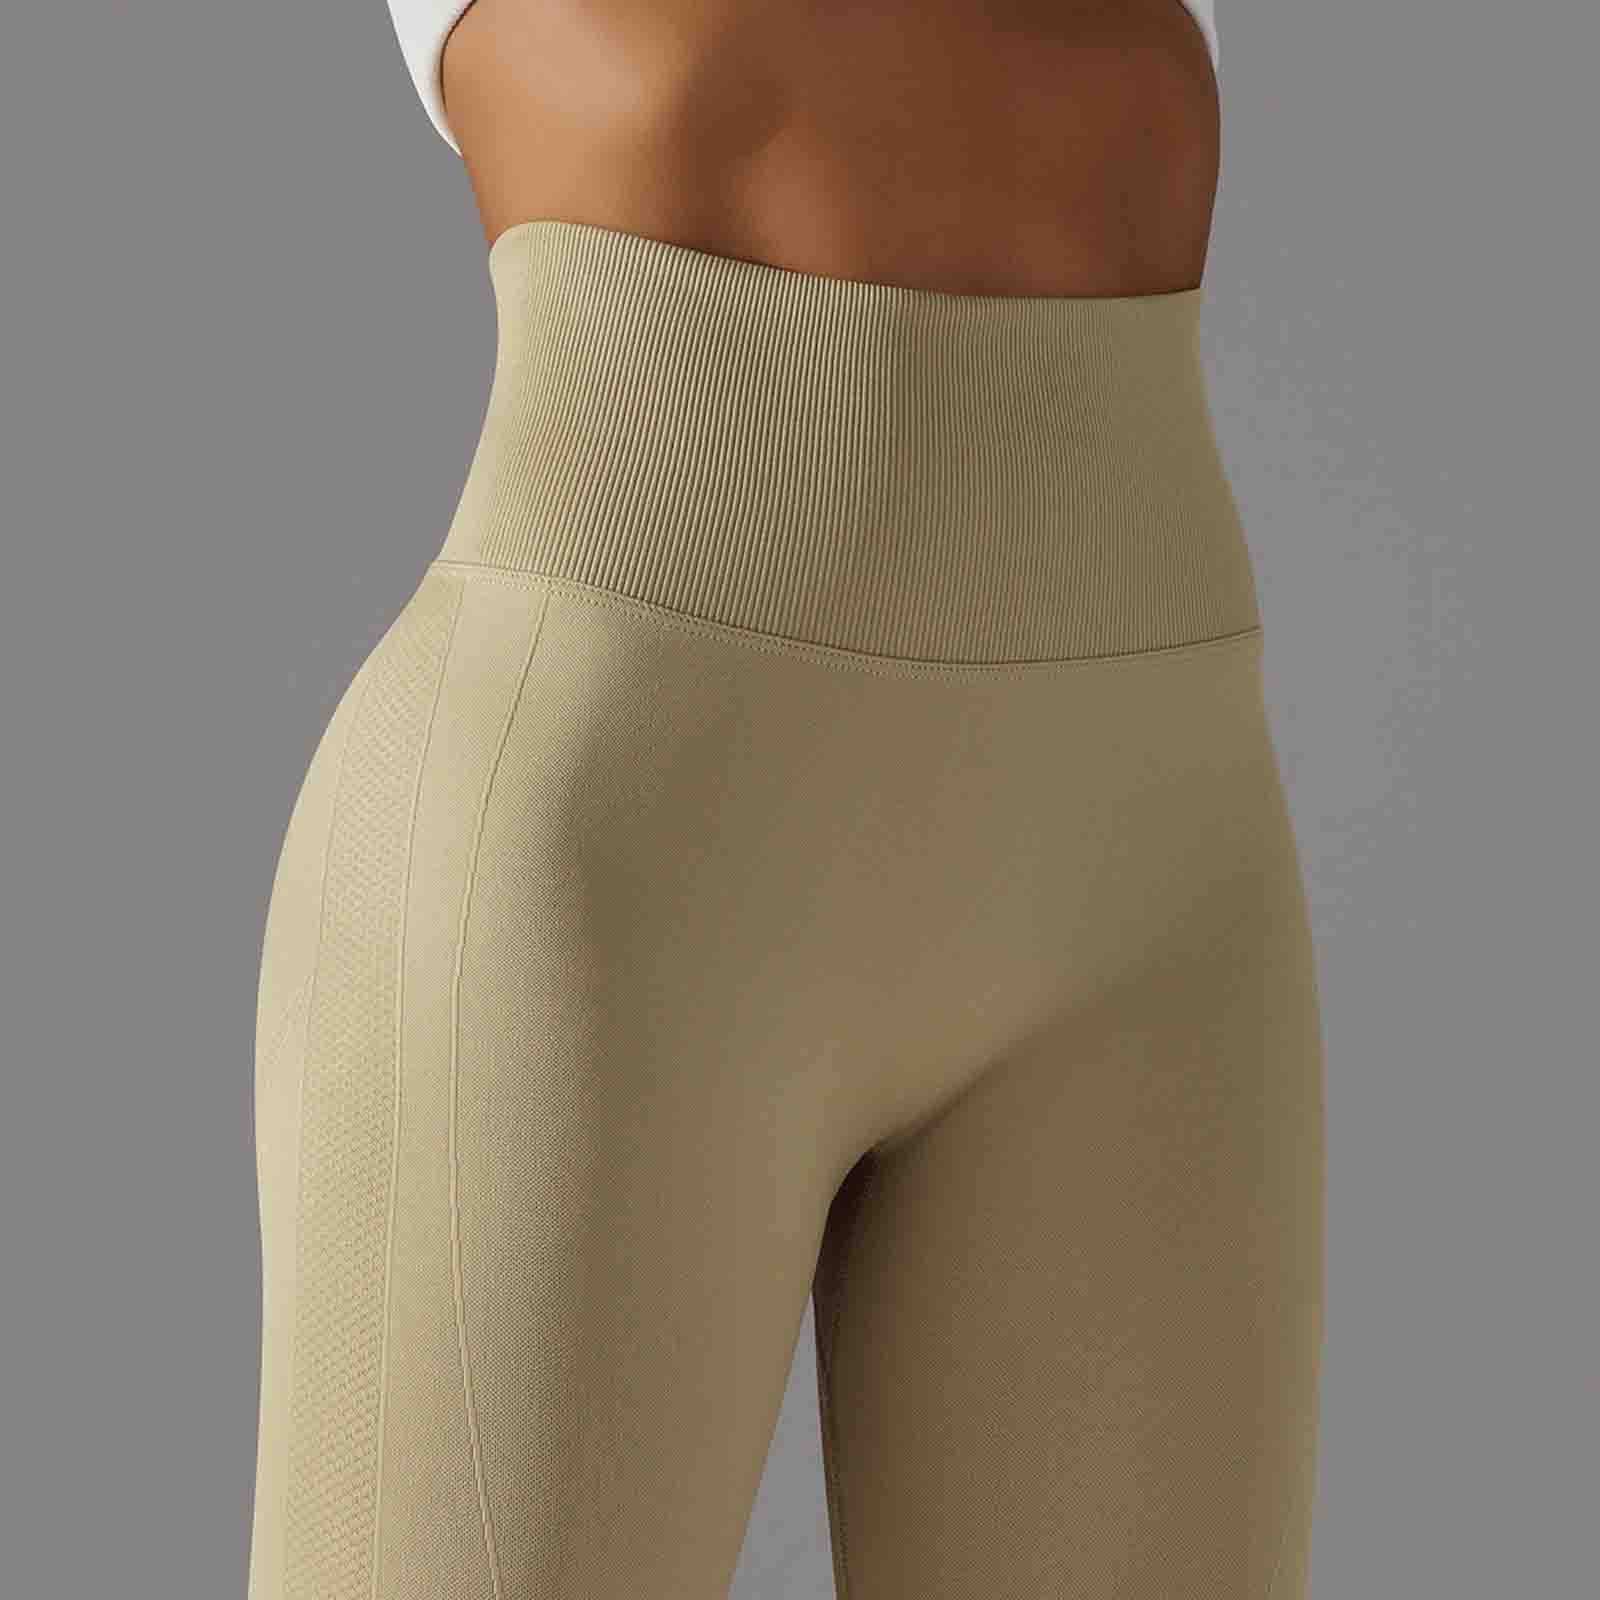 Penkiiy Yoga Pants Women's Fashion Casual Spring Summer Yoga Full Length  Pants Beige Yoga Leggings for Women 